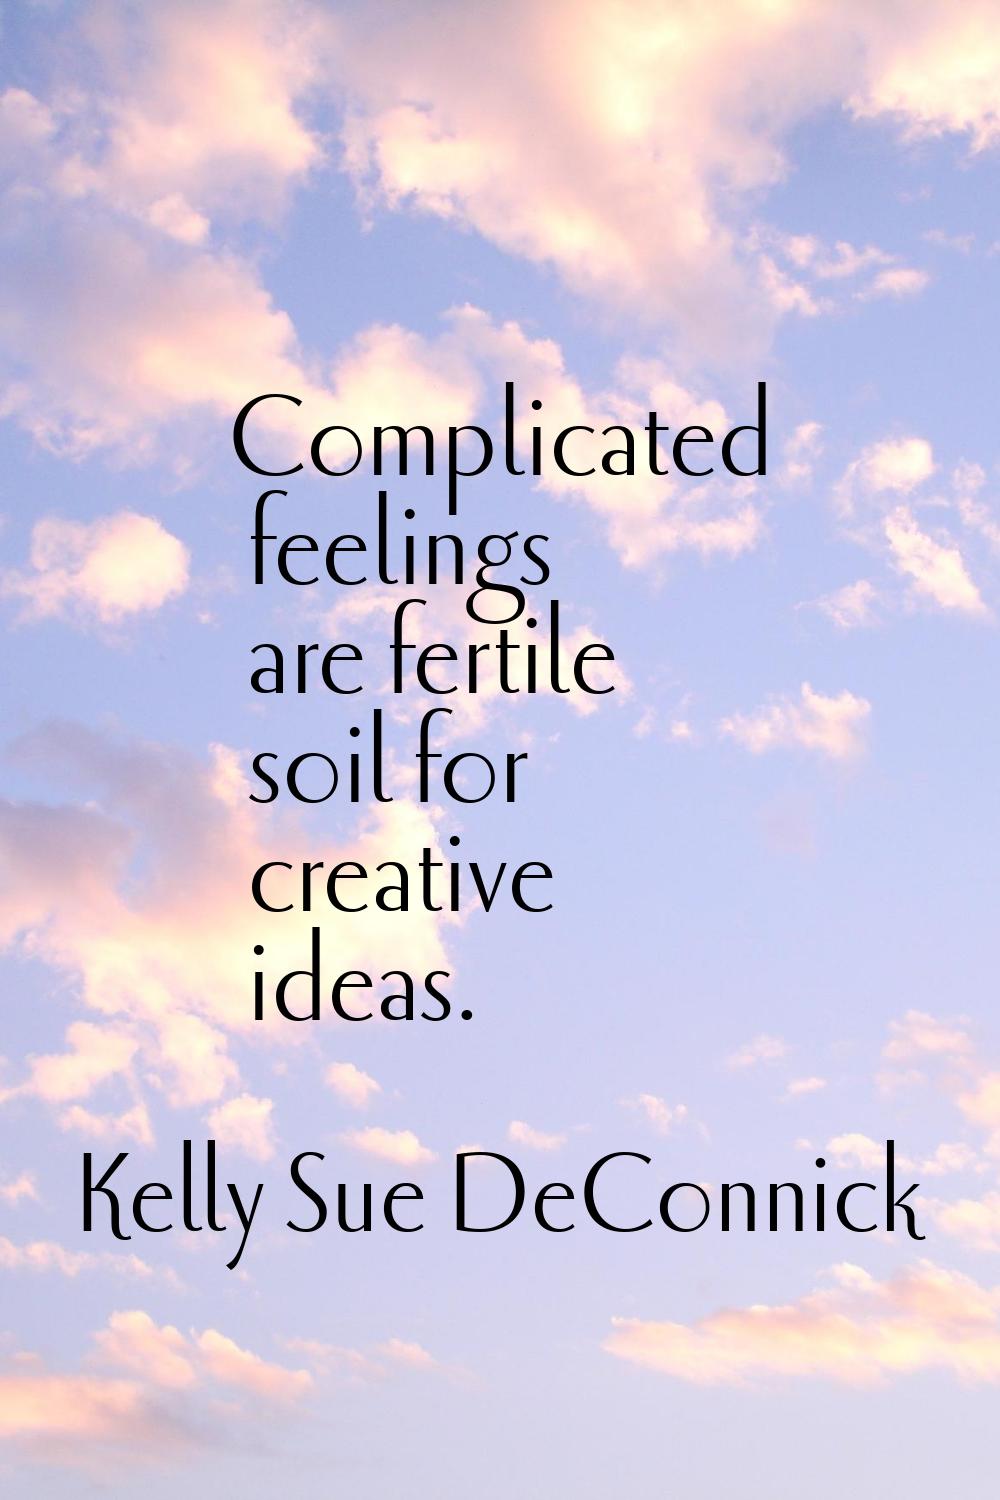 Complicated feelings are fertile soil for creative ideas.